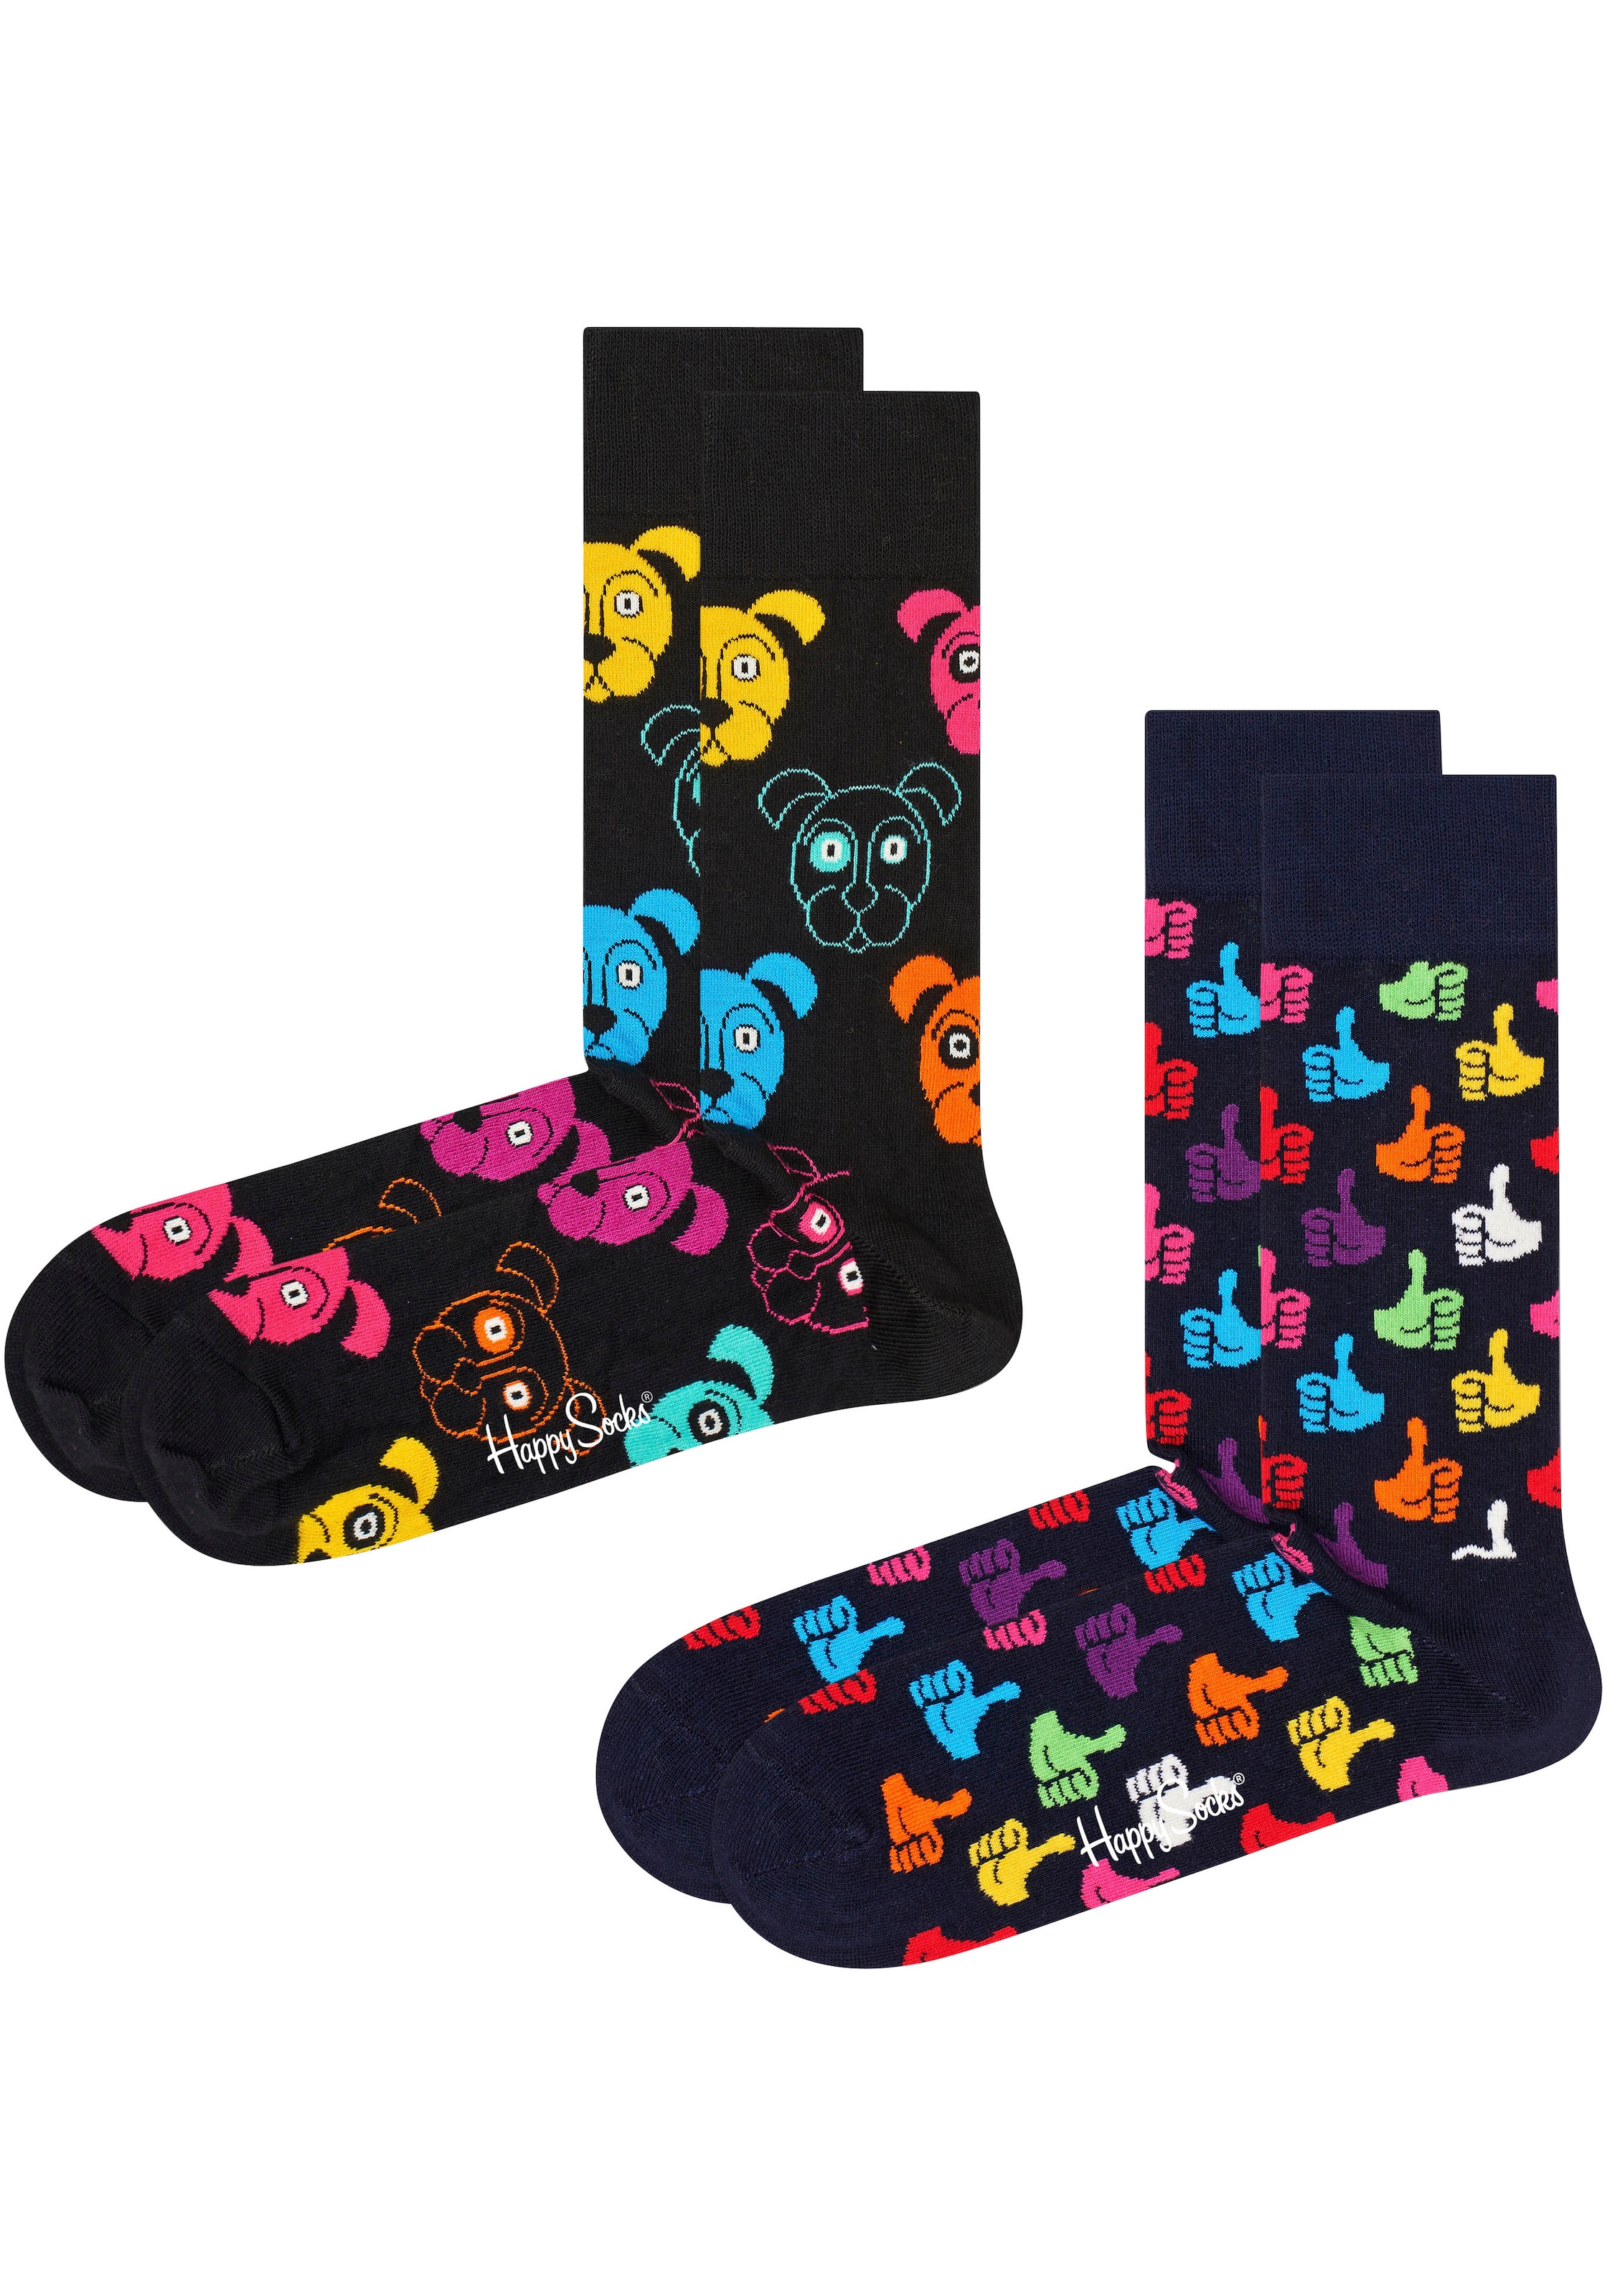 & Black Up Classic Paar), Thumbs | Socken Happy Dog BAUR Socks (Packung, Socks »2-Pack Socks«, Friday 2 Dog